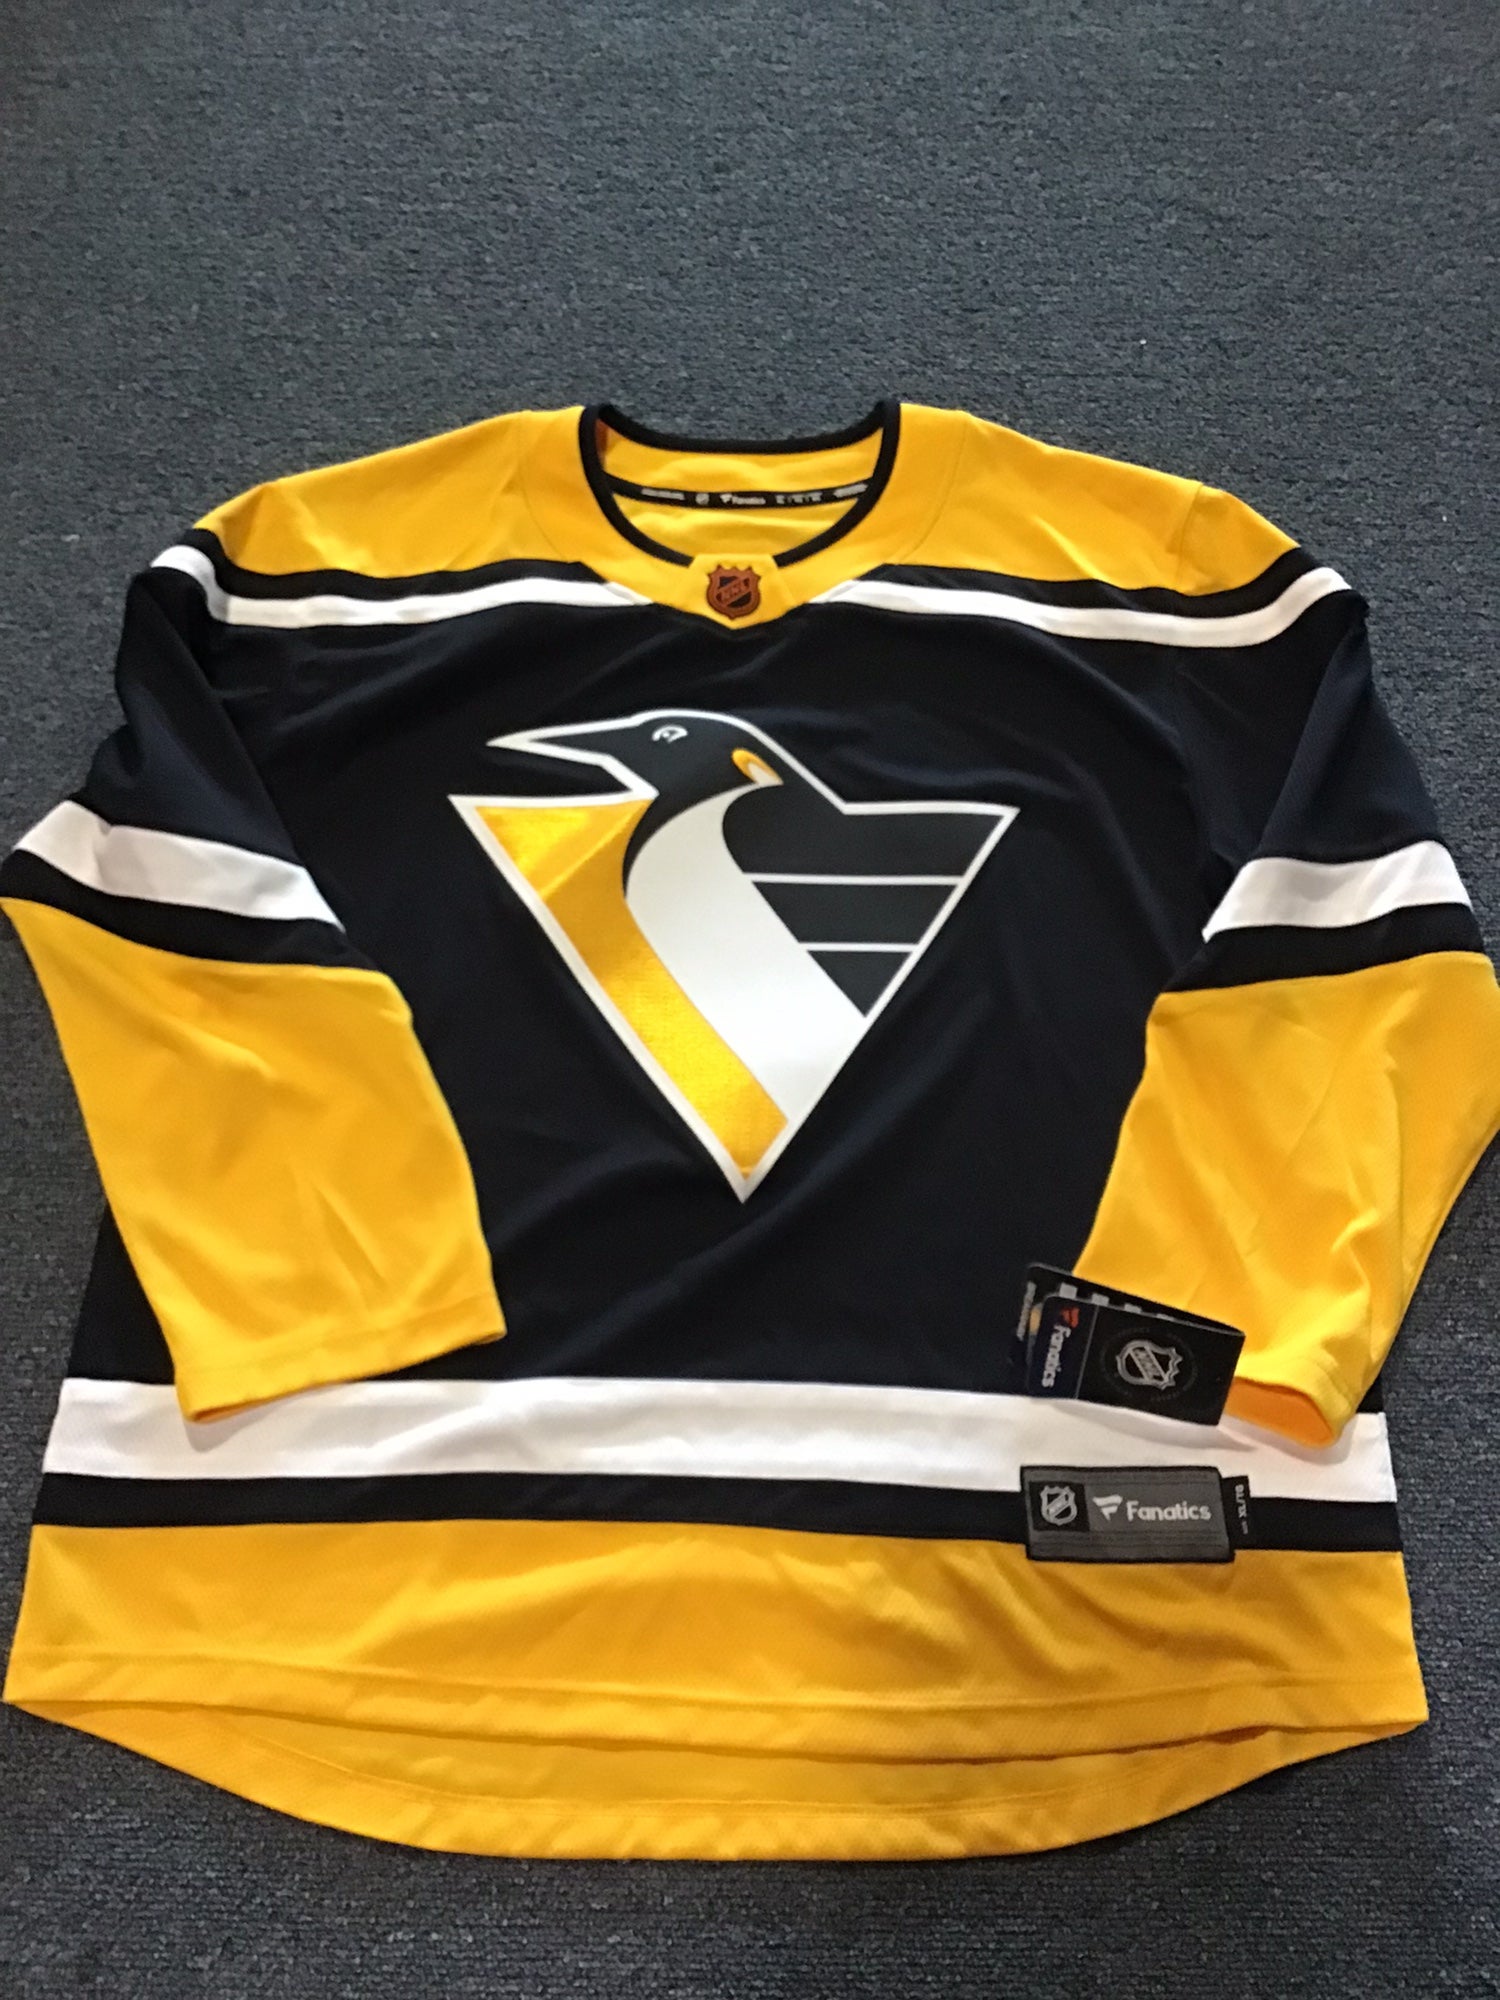 fanatics penguins jersey